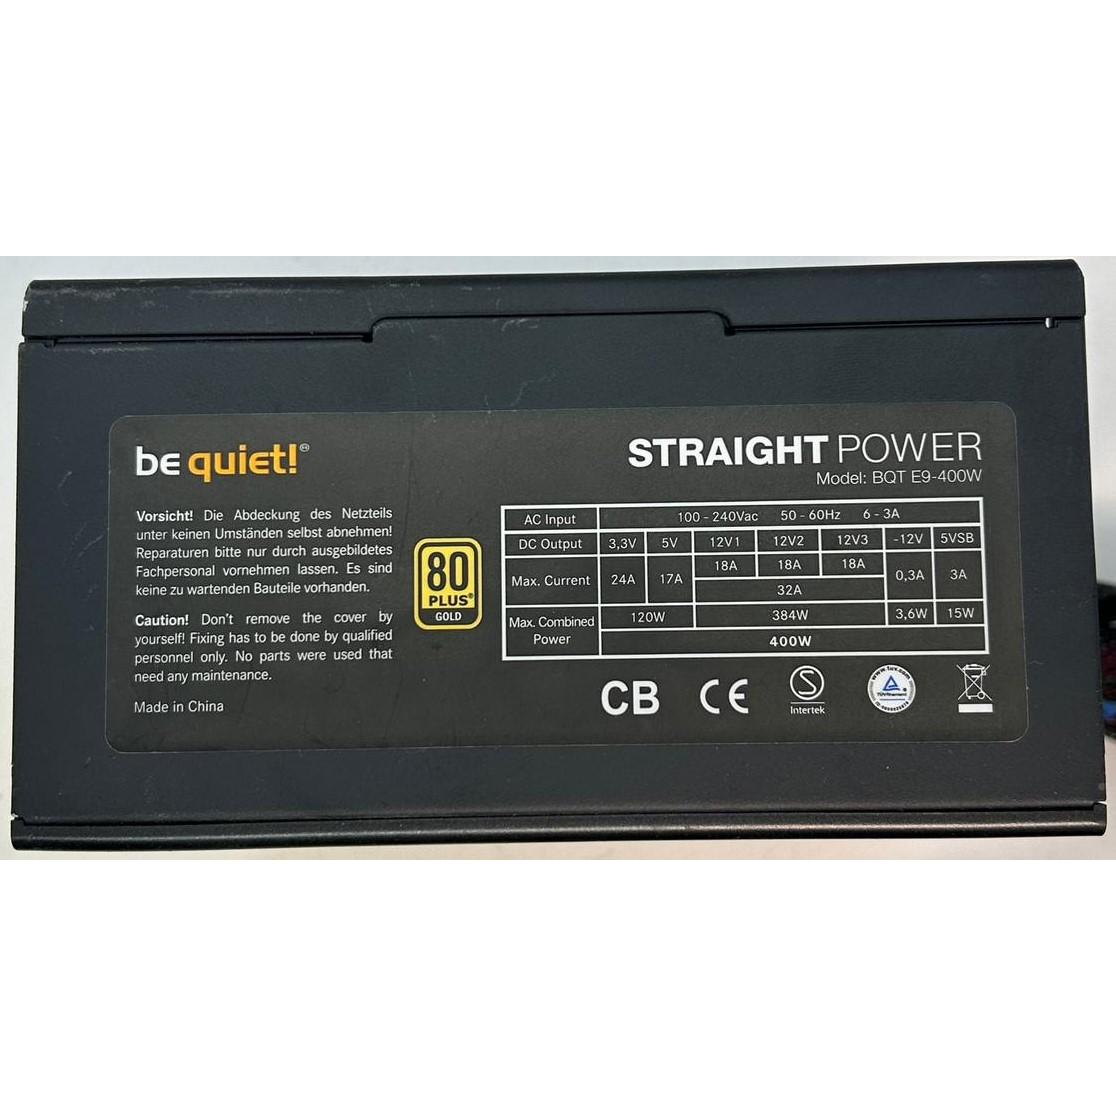 be quiet! Straight Power BQT E9-400W | 400W